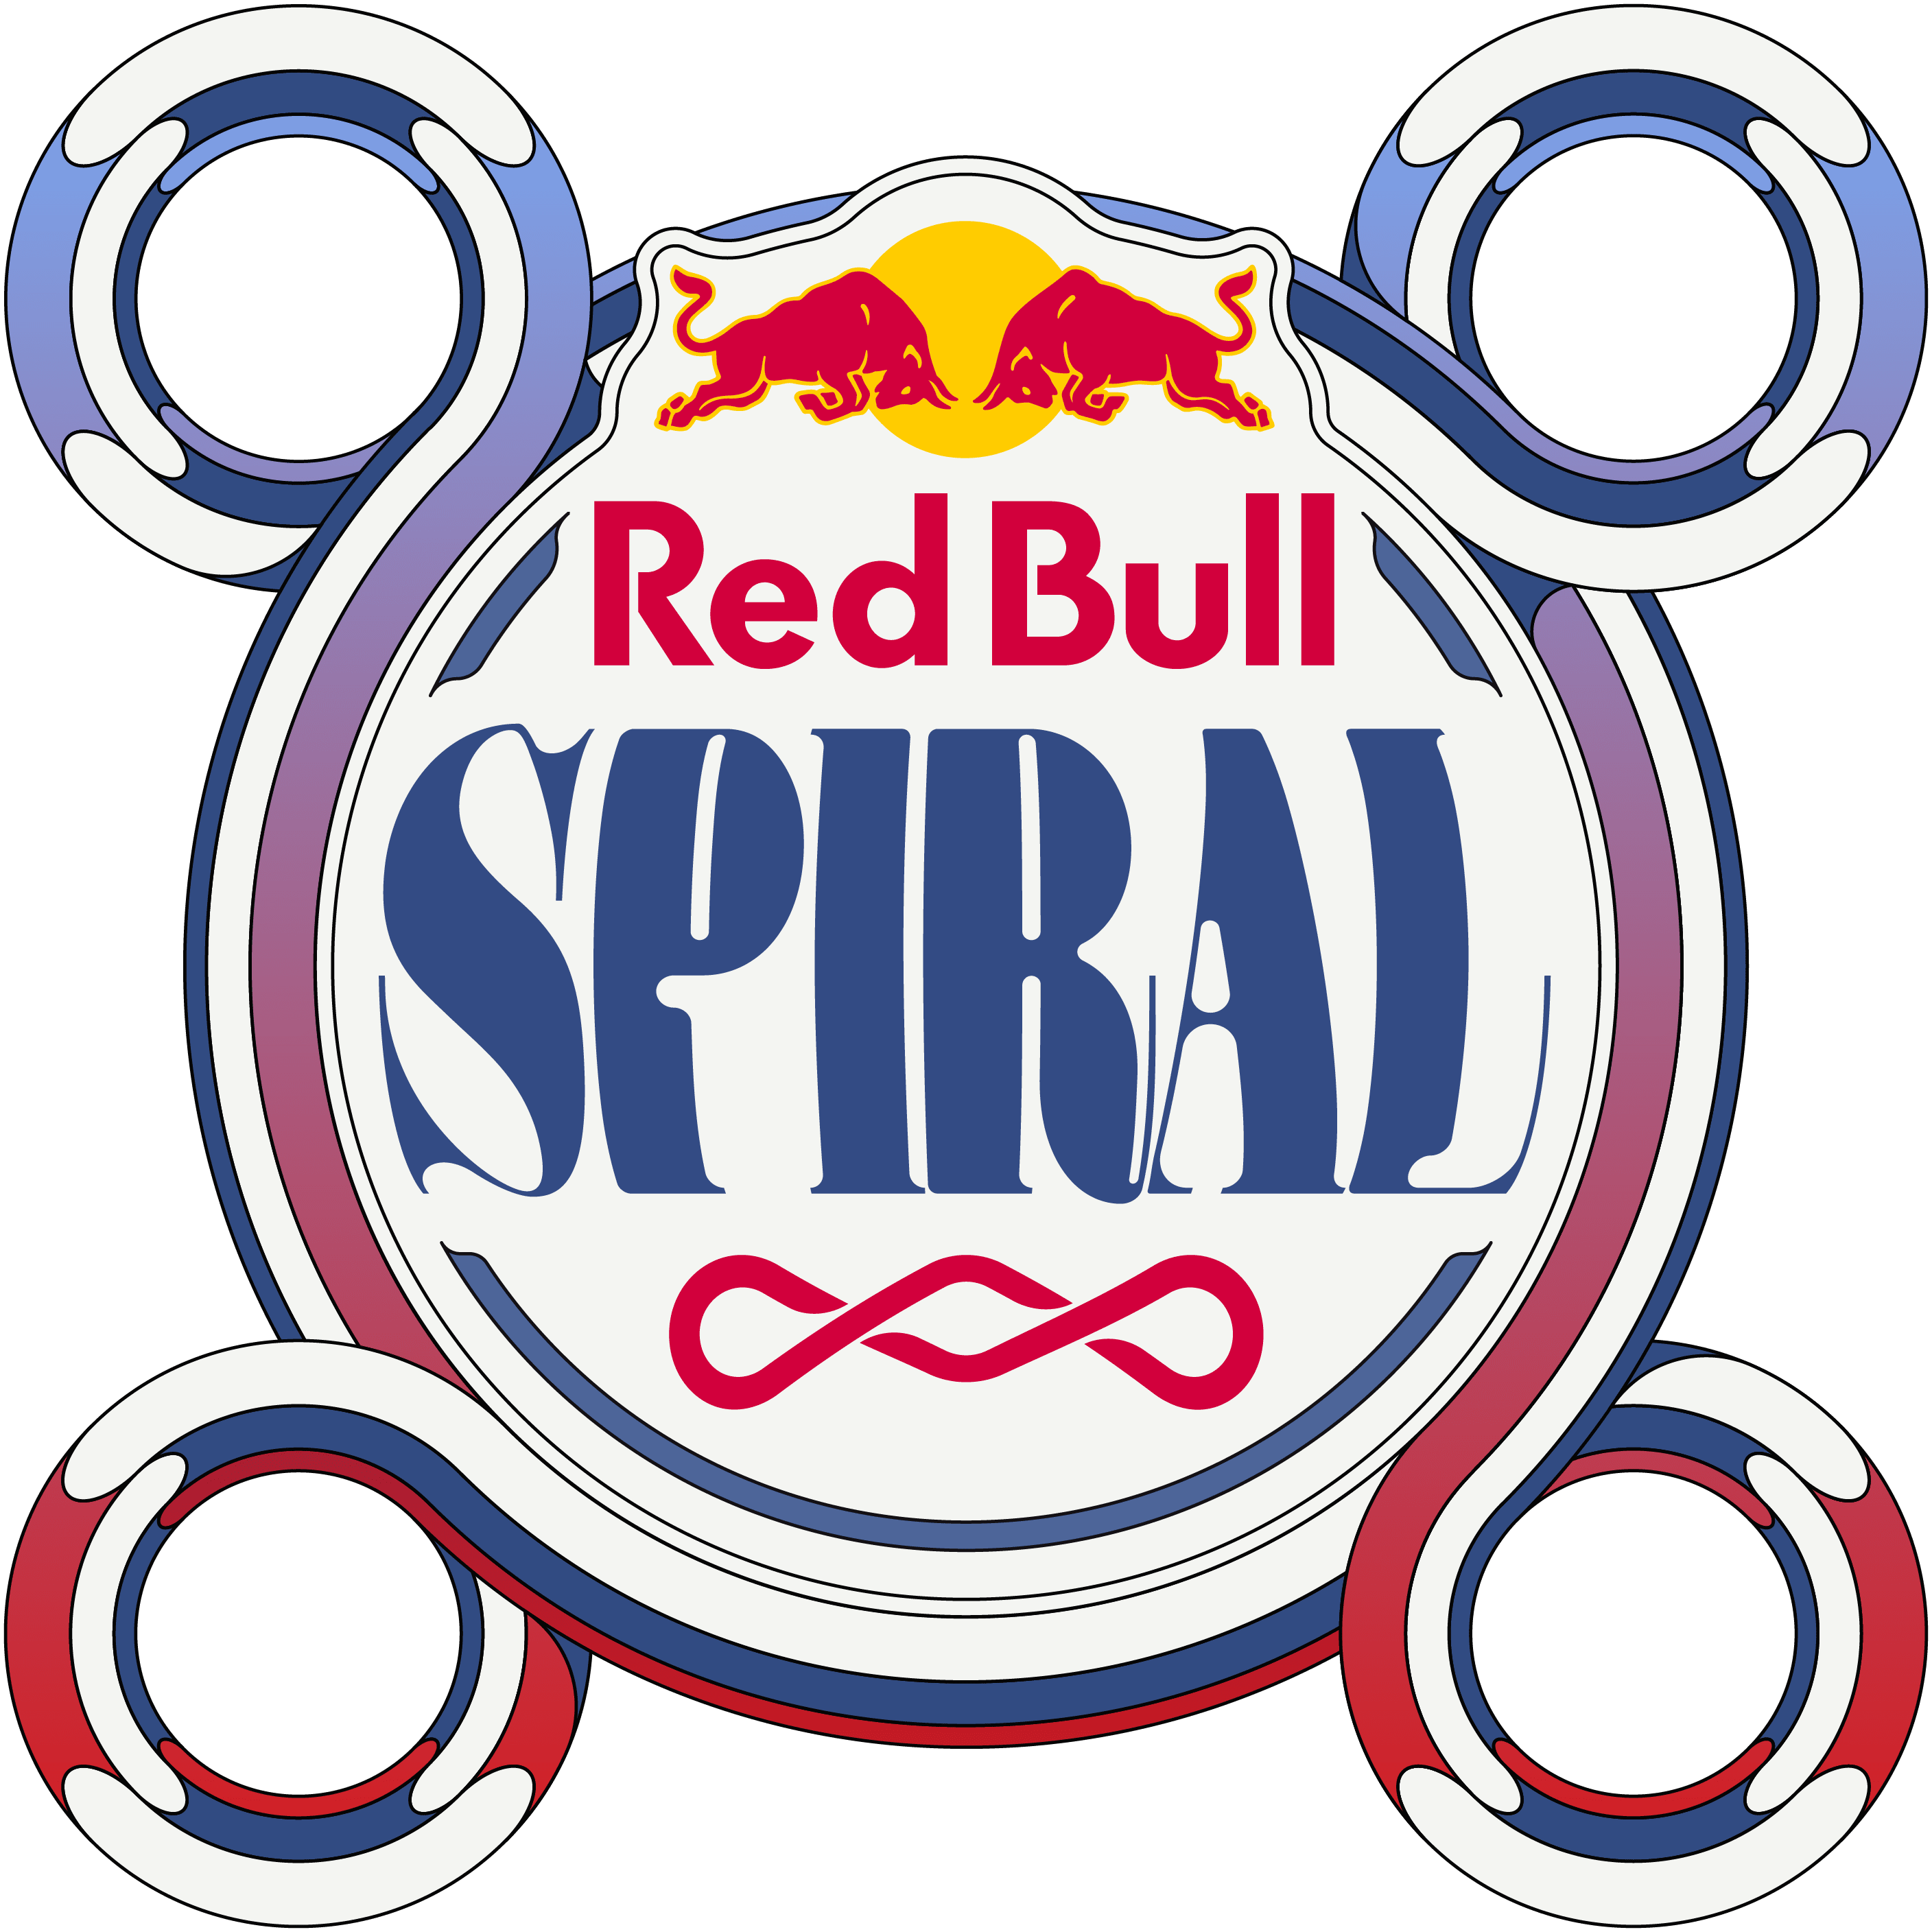 Red Bull Spiral